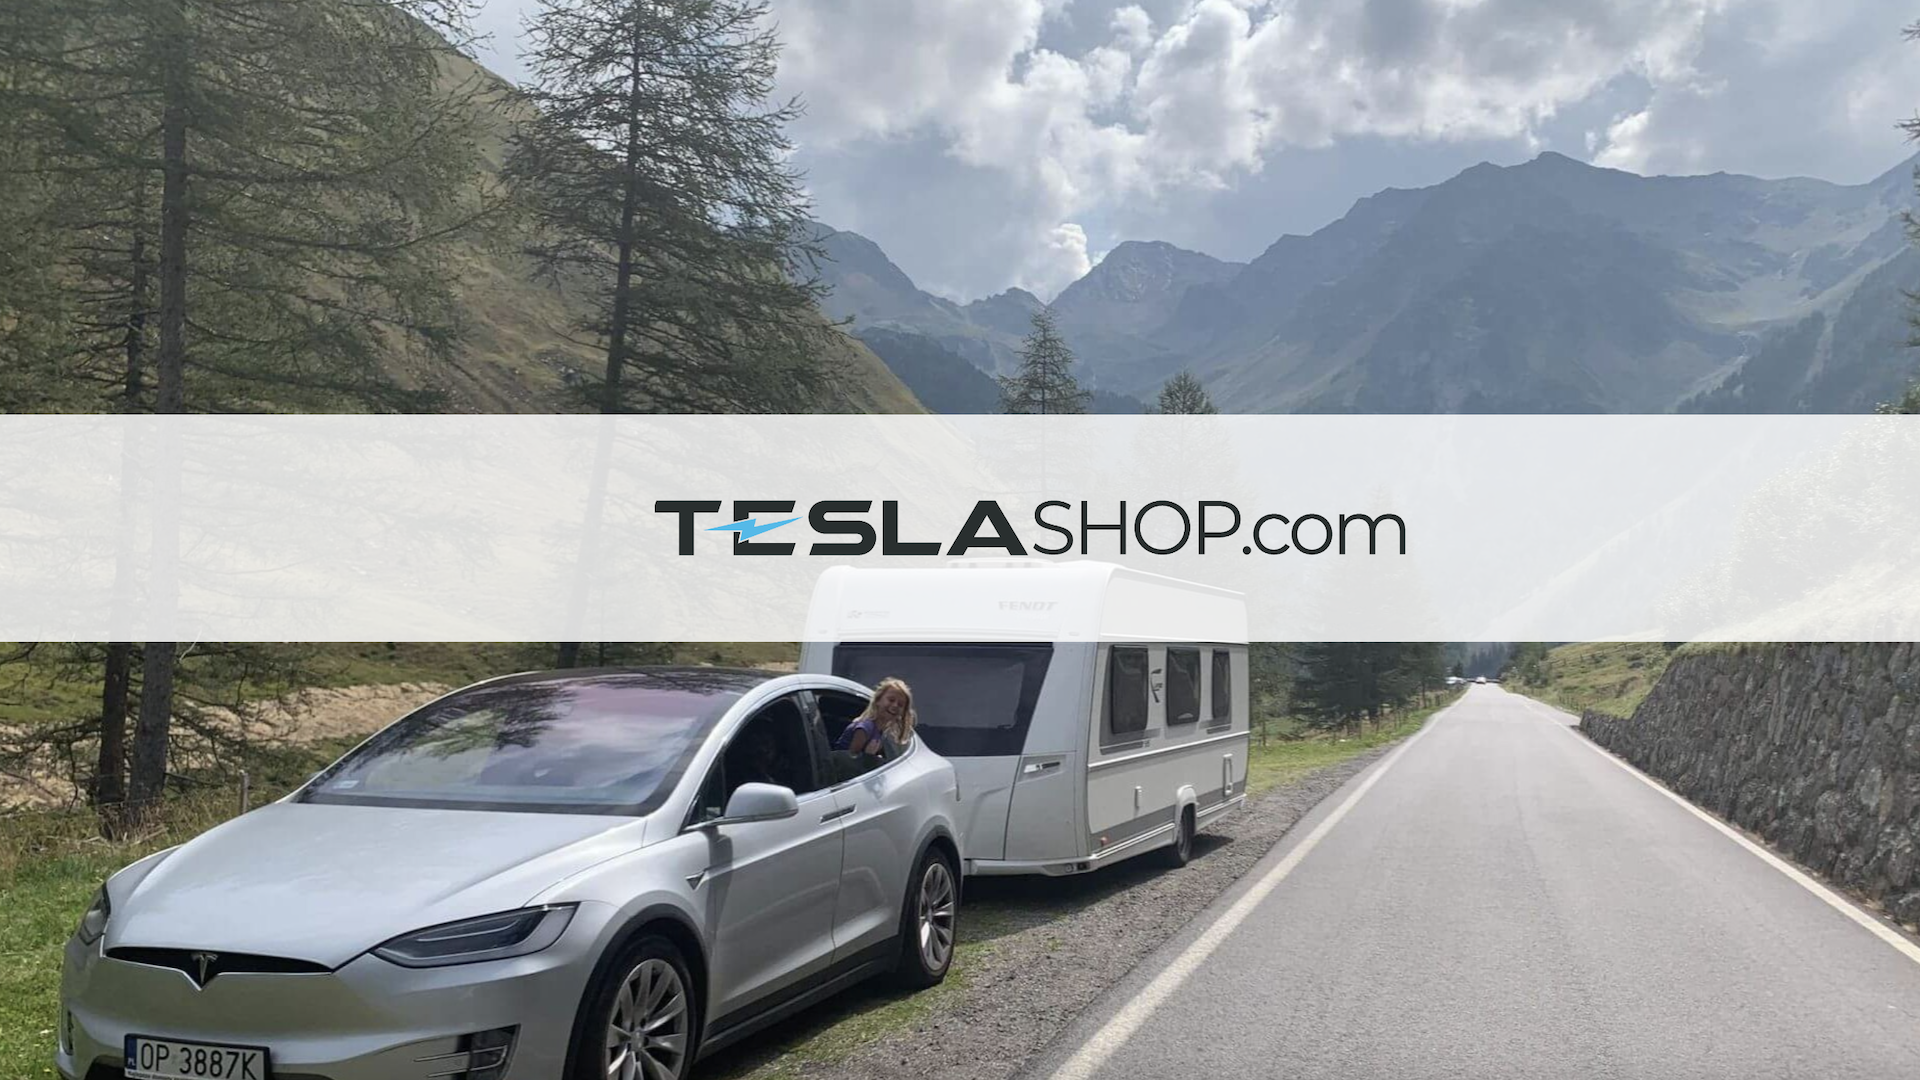 TeslaShop.com homepage